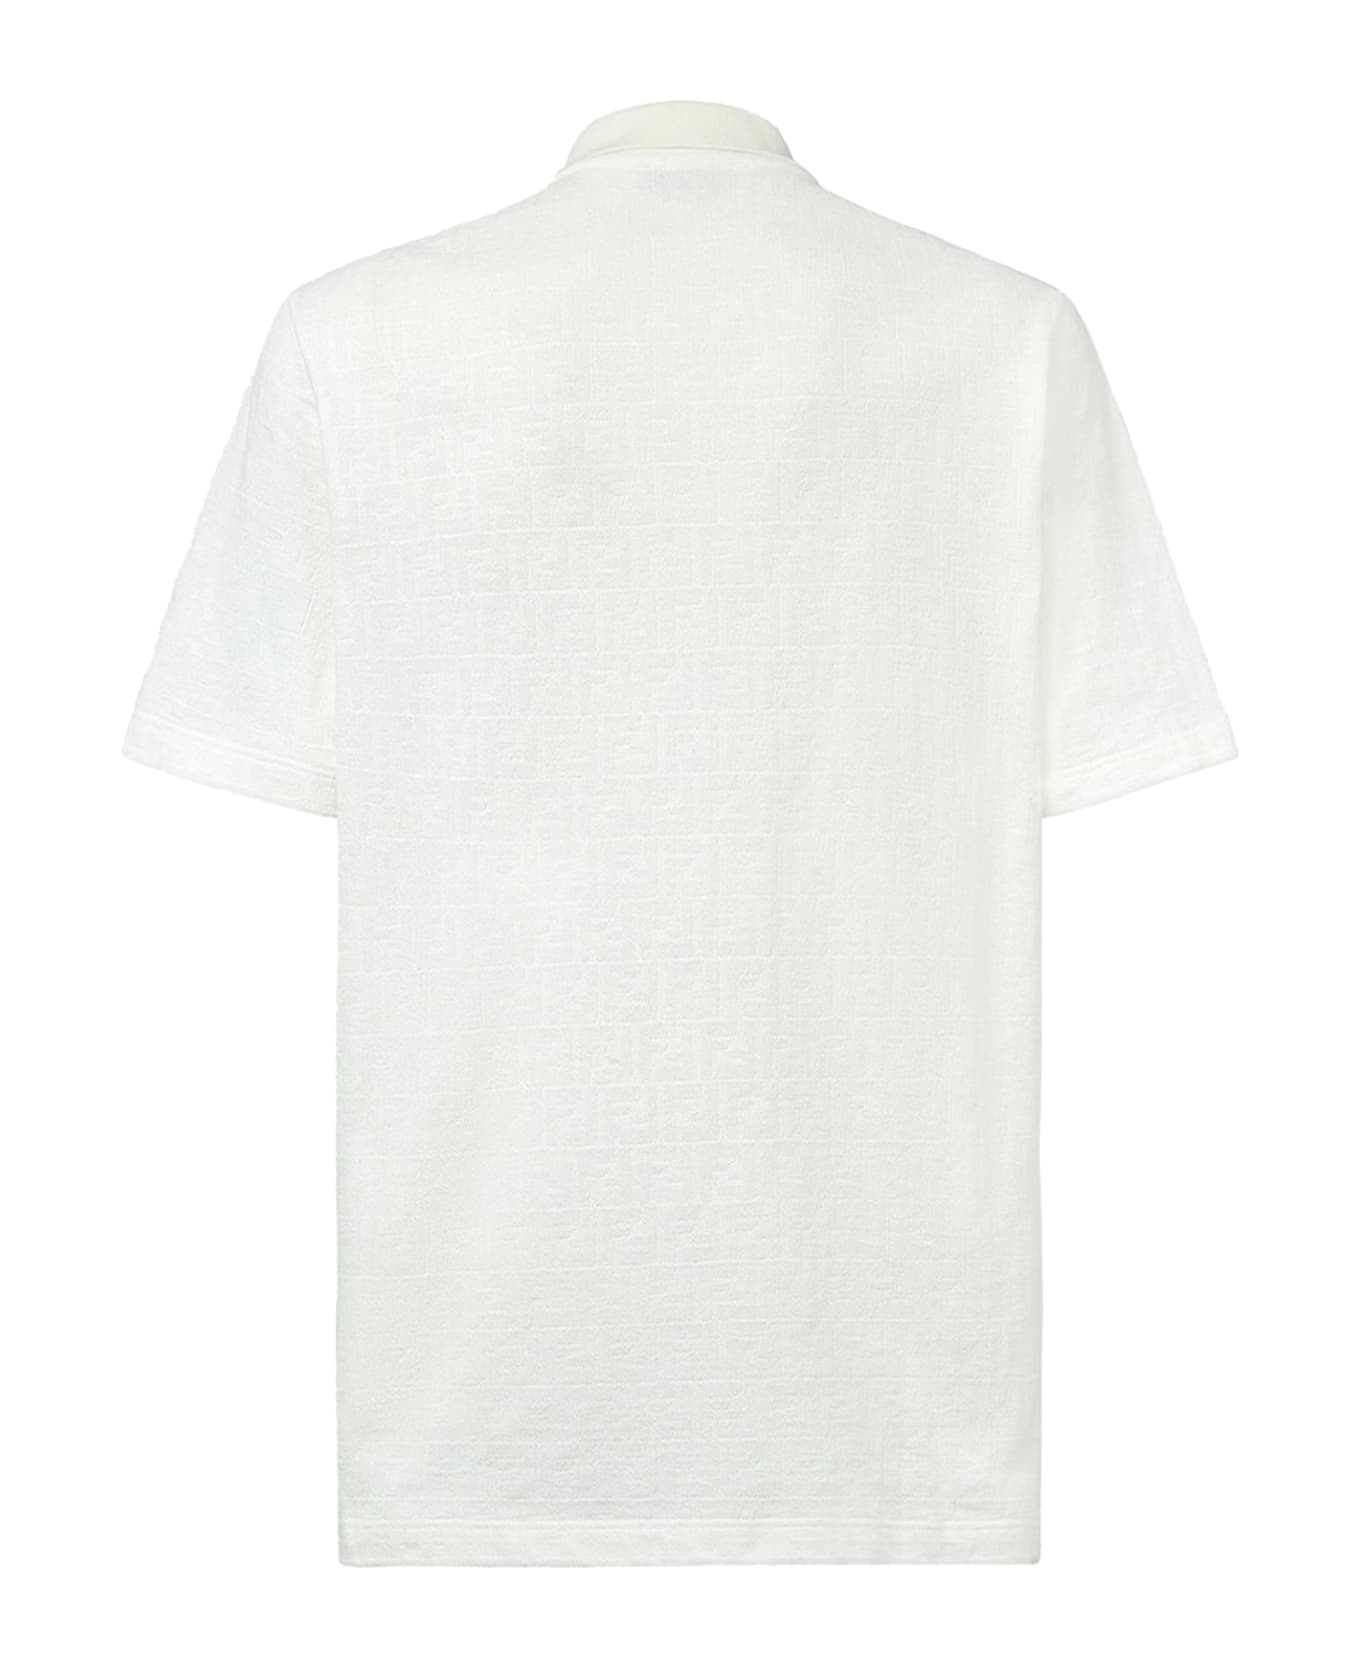 Fendi Polo Shirt - NATURALE